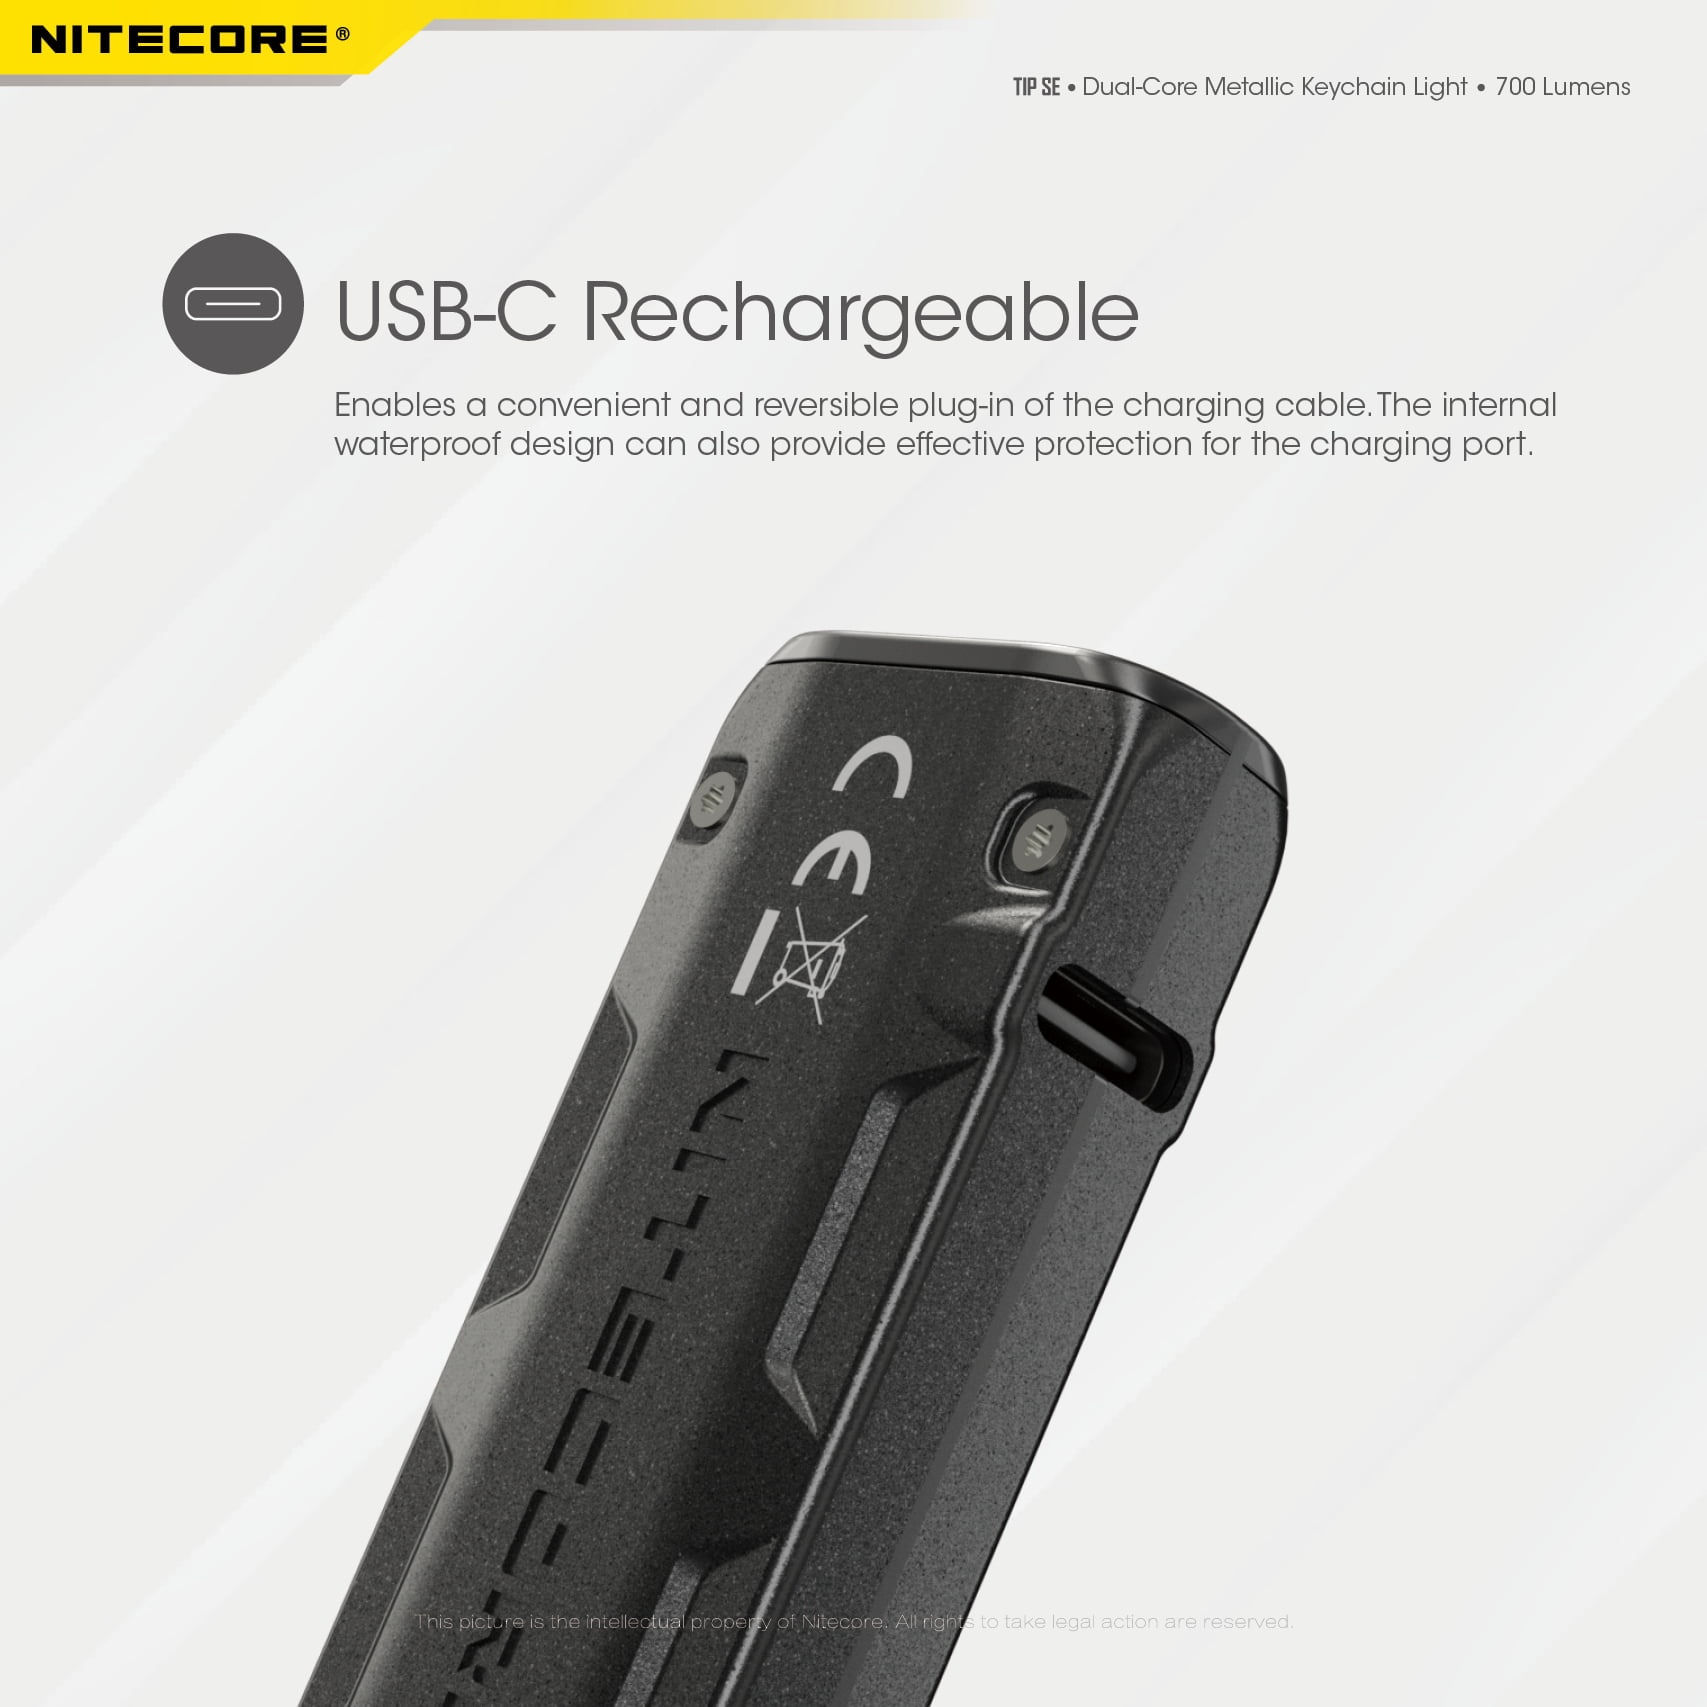 Nitecore Tip SE 700 Lumen Rechargeable Keyschin EDC Flashlight w/ USB-C  charging cable (Grey)